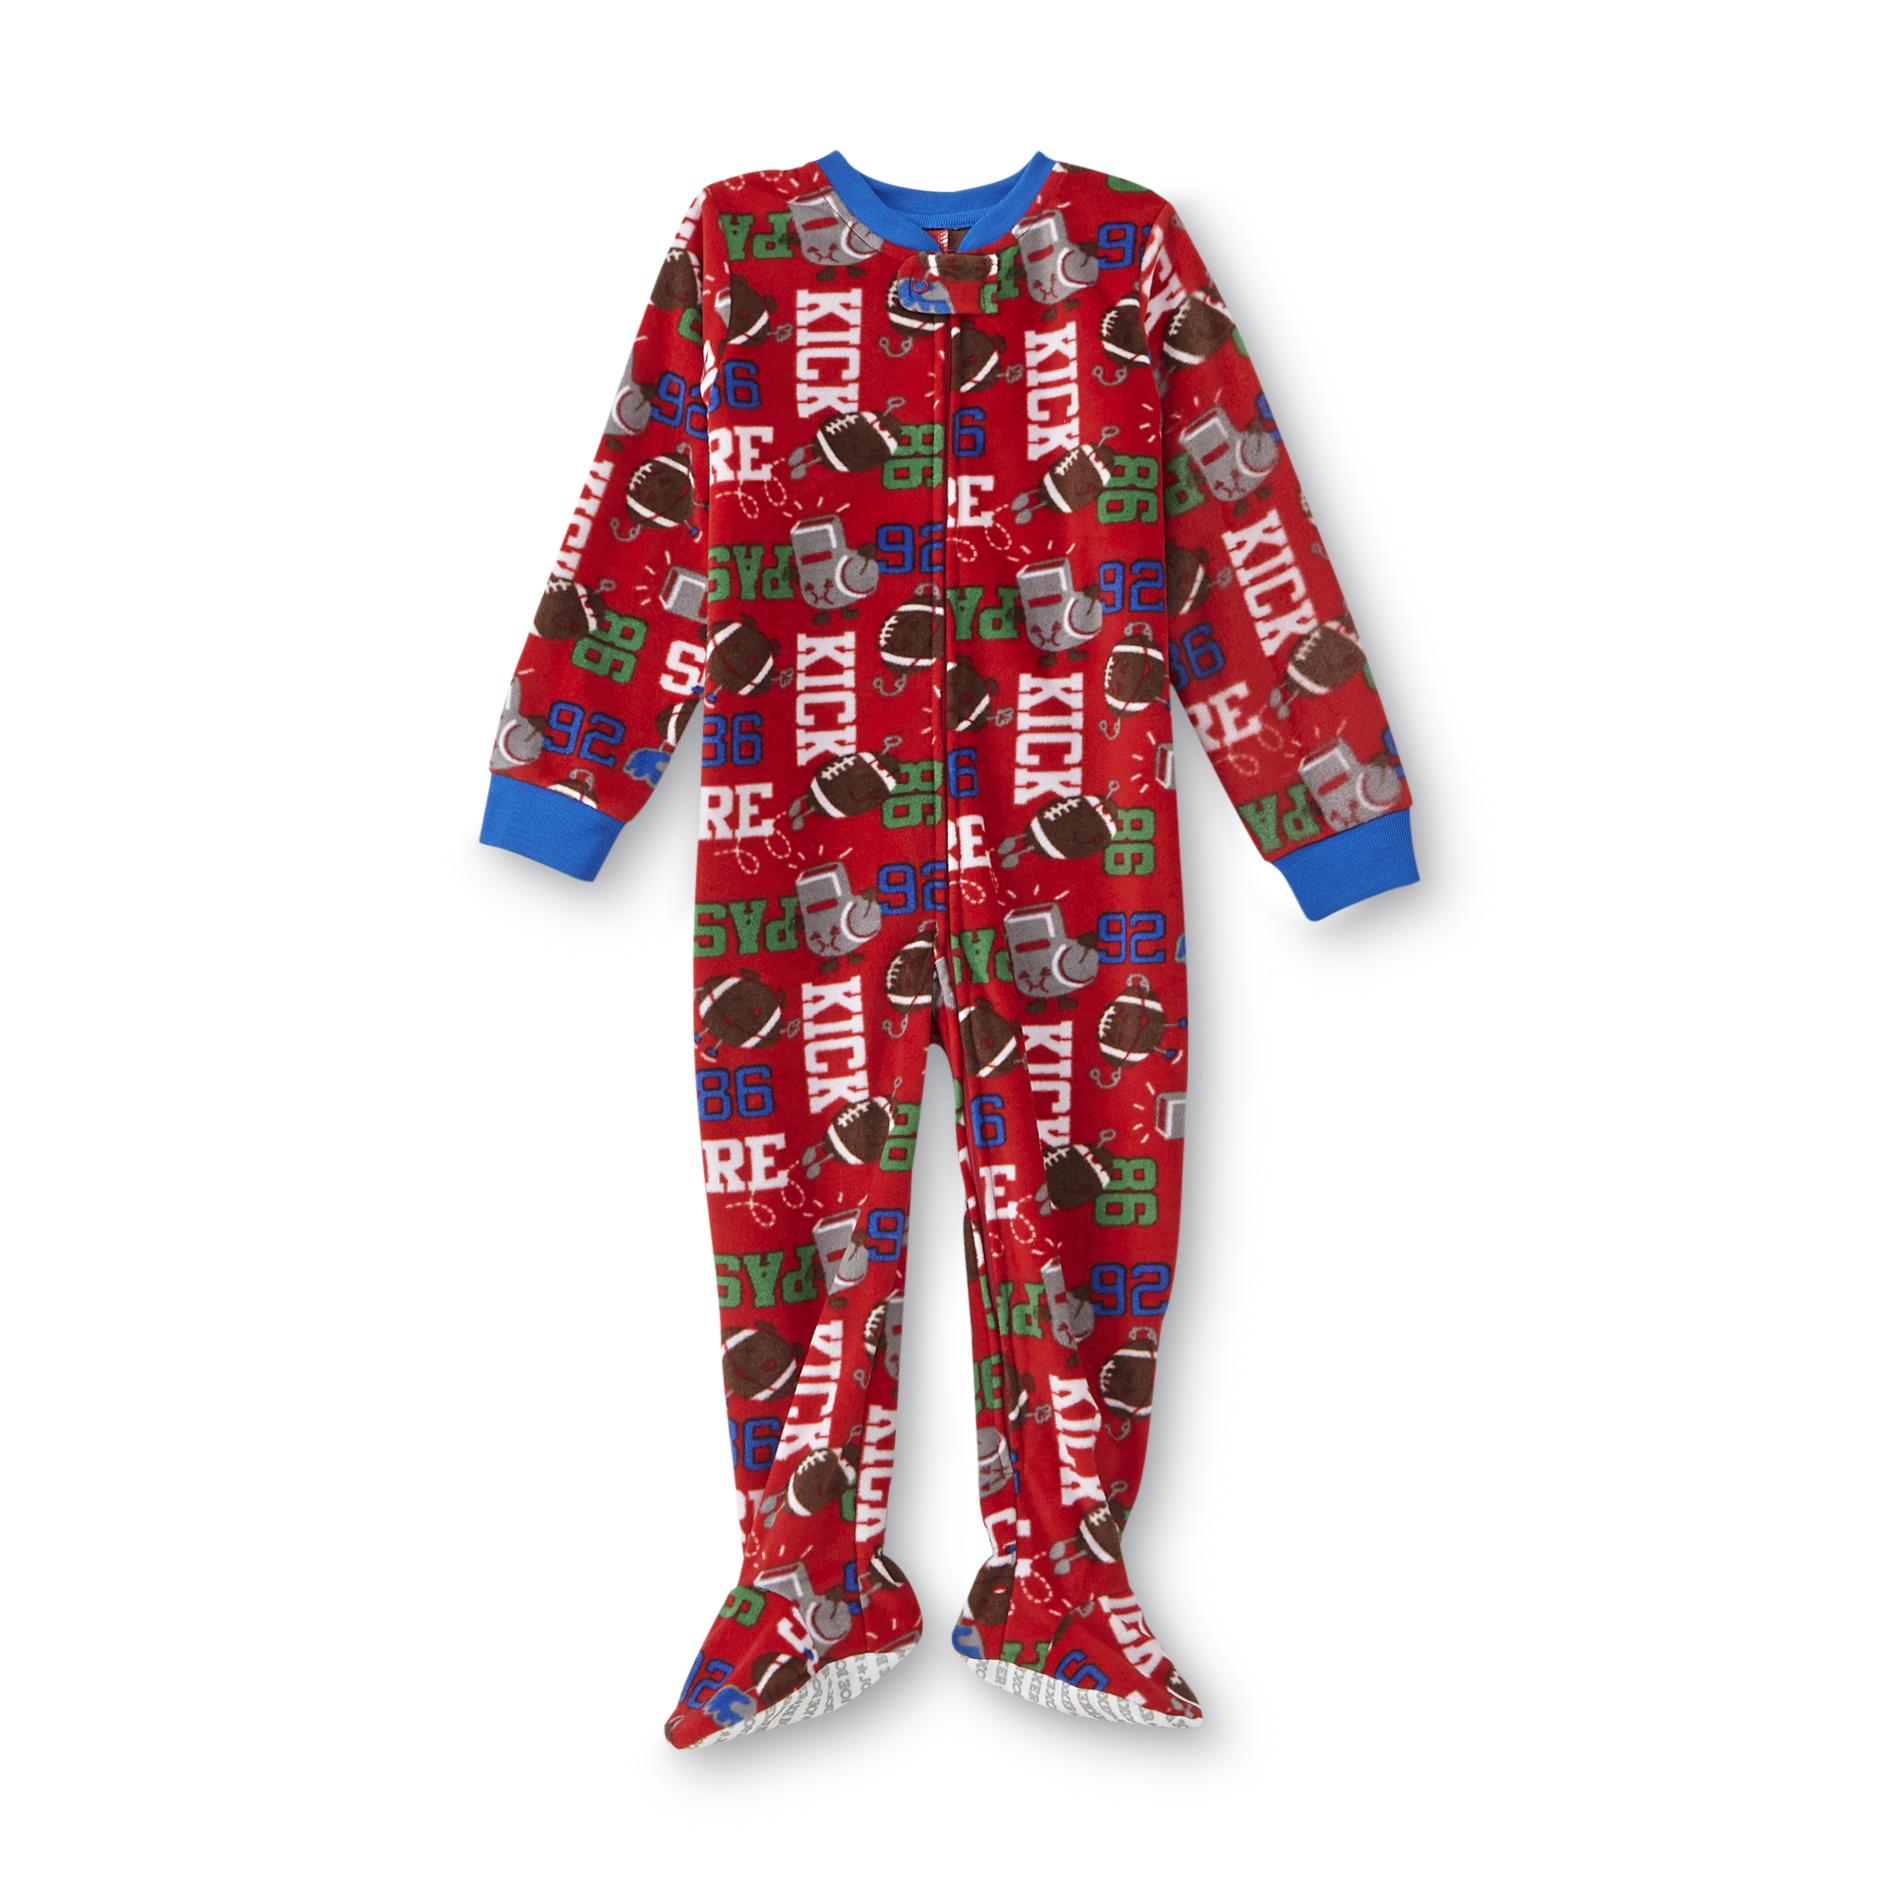 Toddler Boy's Fleece Sleeper Pajamas - Football